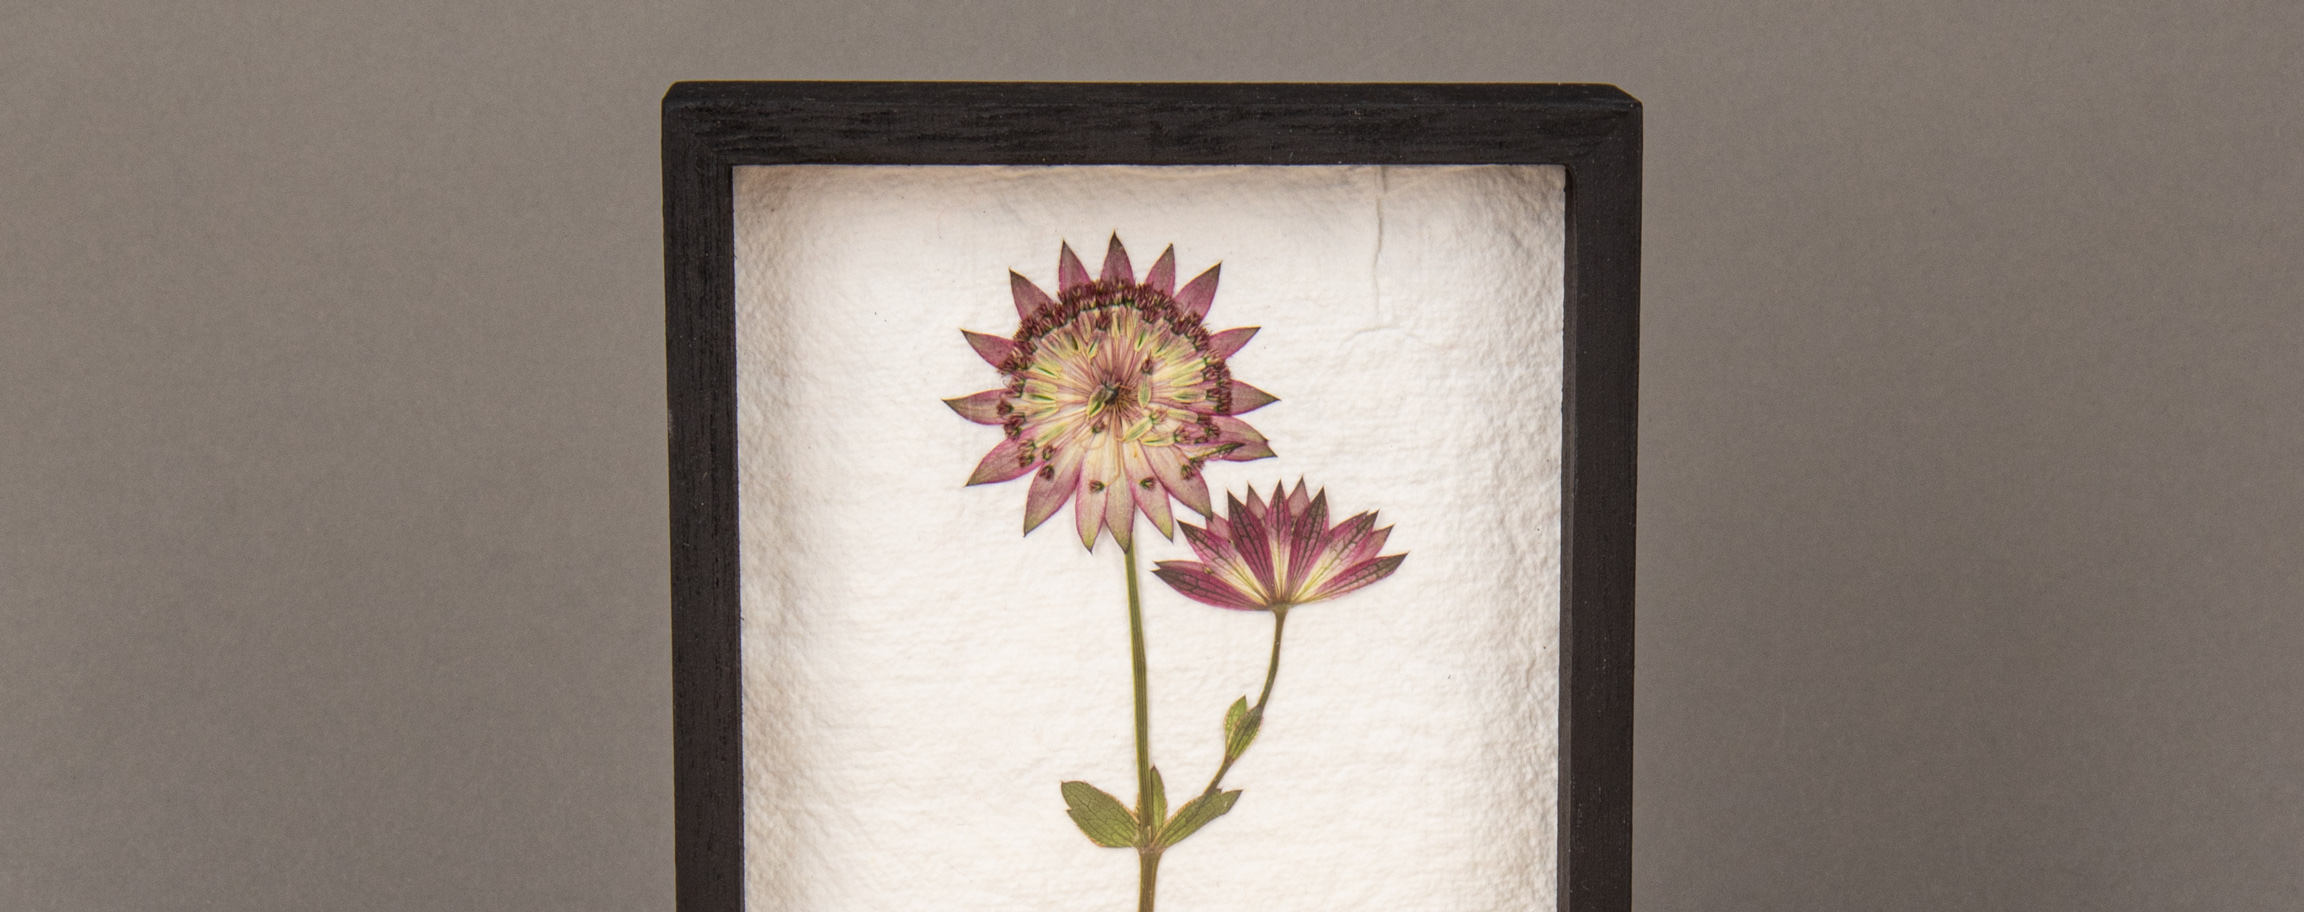 Pressed flowers in frame